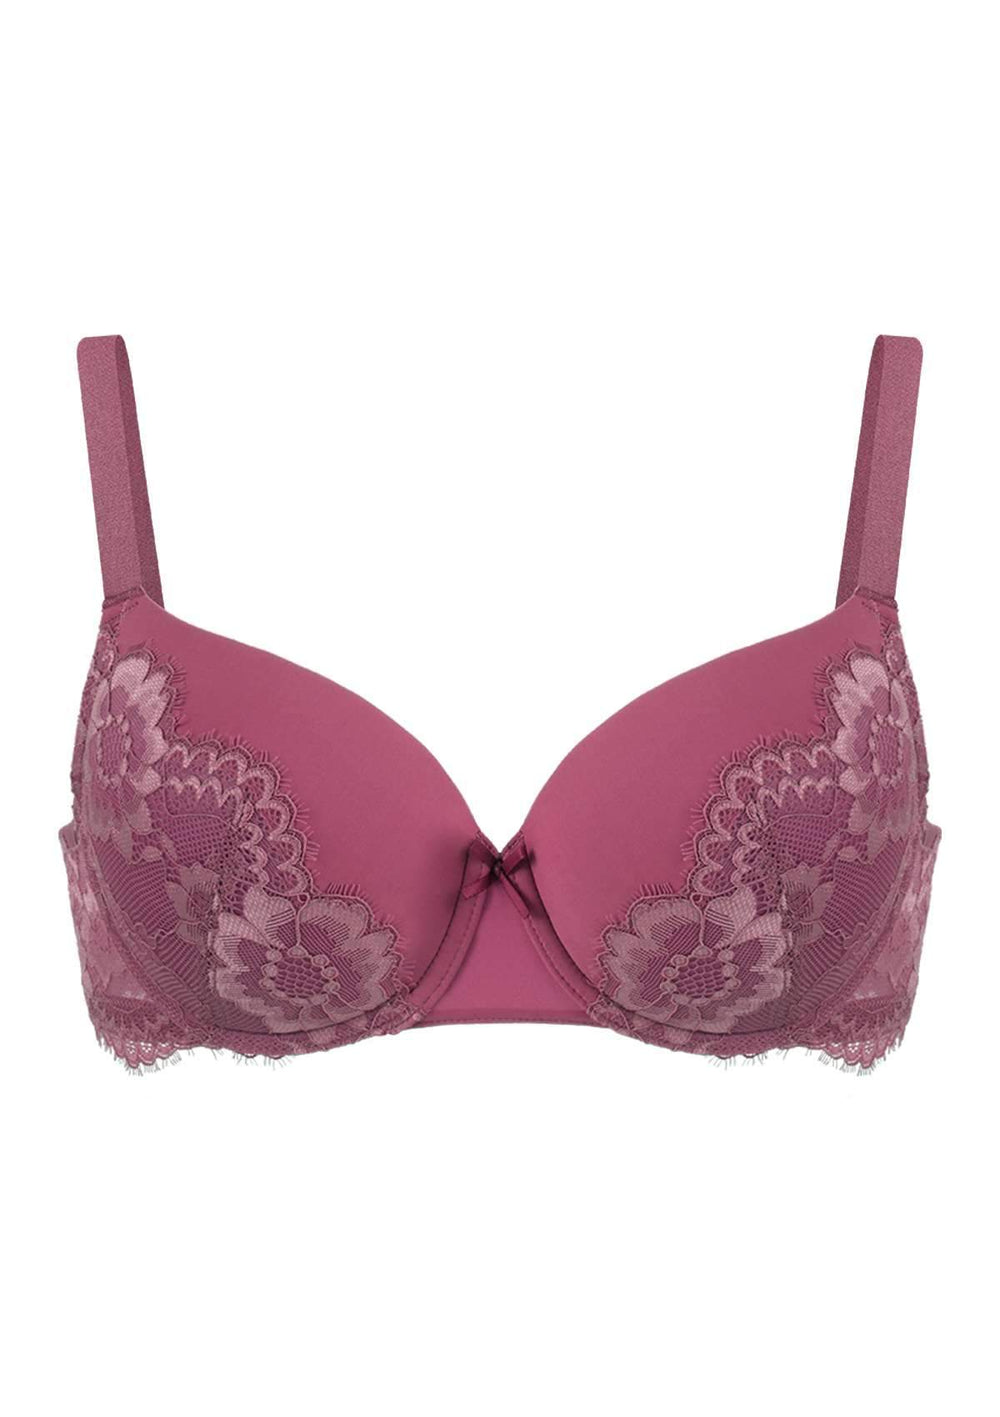 Underwired demi-cup bra neckline fine floral embroidery seduction fuchsia  pink, AGATHE